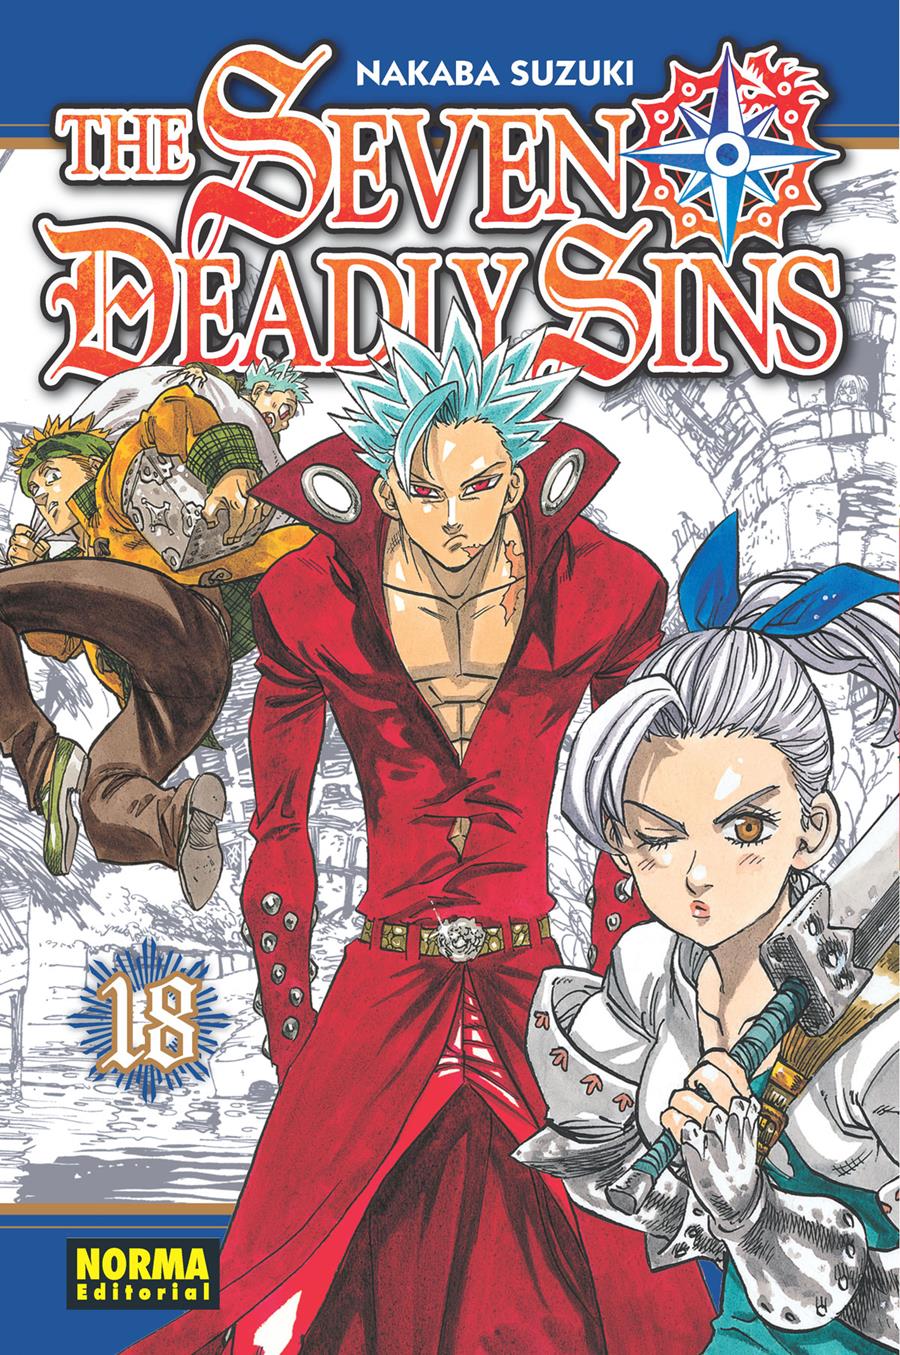 The seven deadly sins 18 | N0218-NOR18 | Nakaba Suzuki | Terra de Còmic - Tu tienda de cómics online especializada en cómics, manga y merchandising